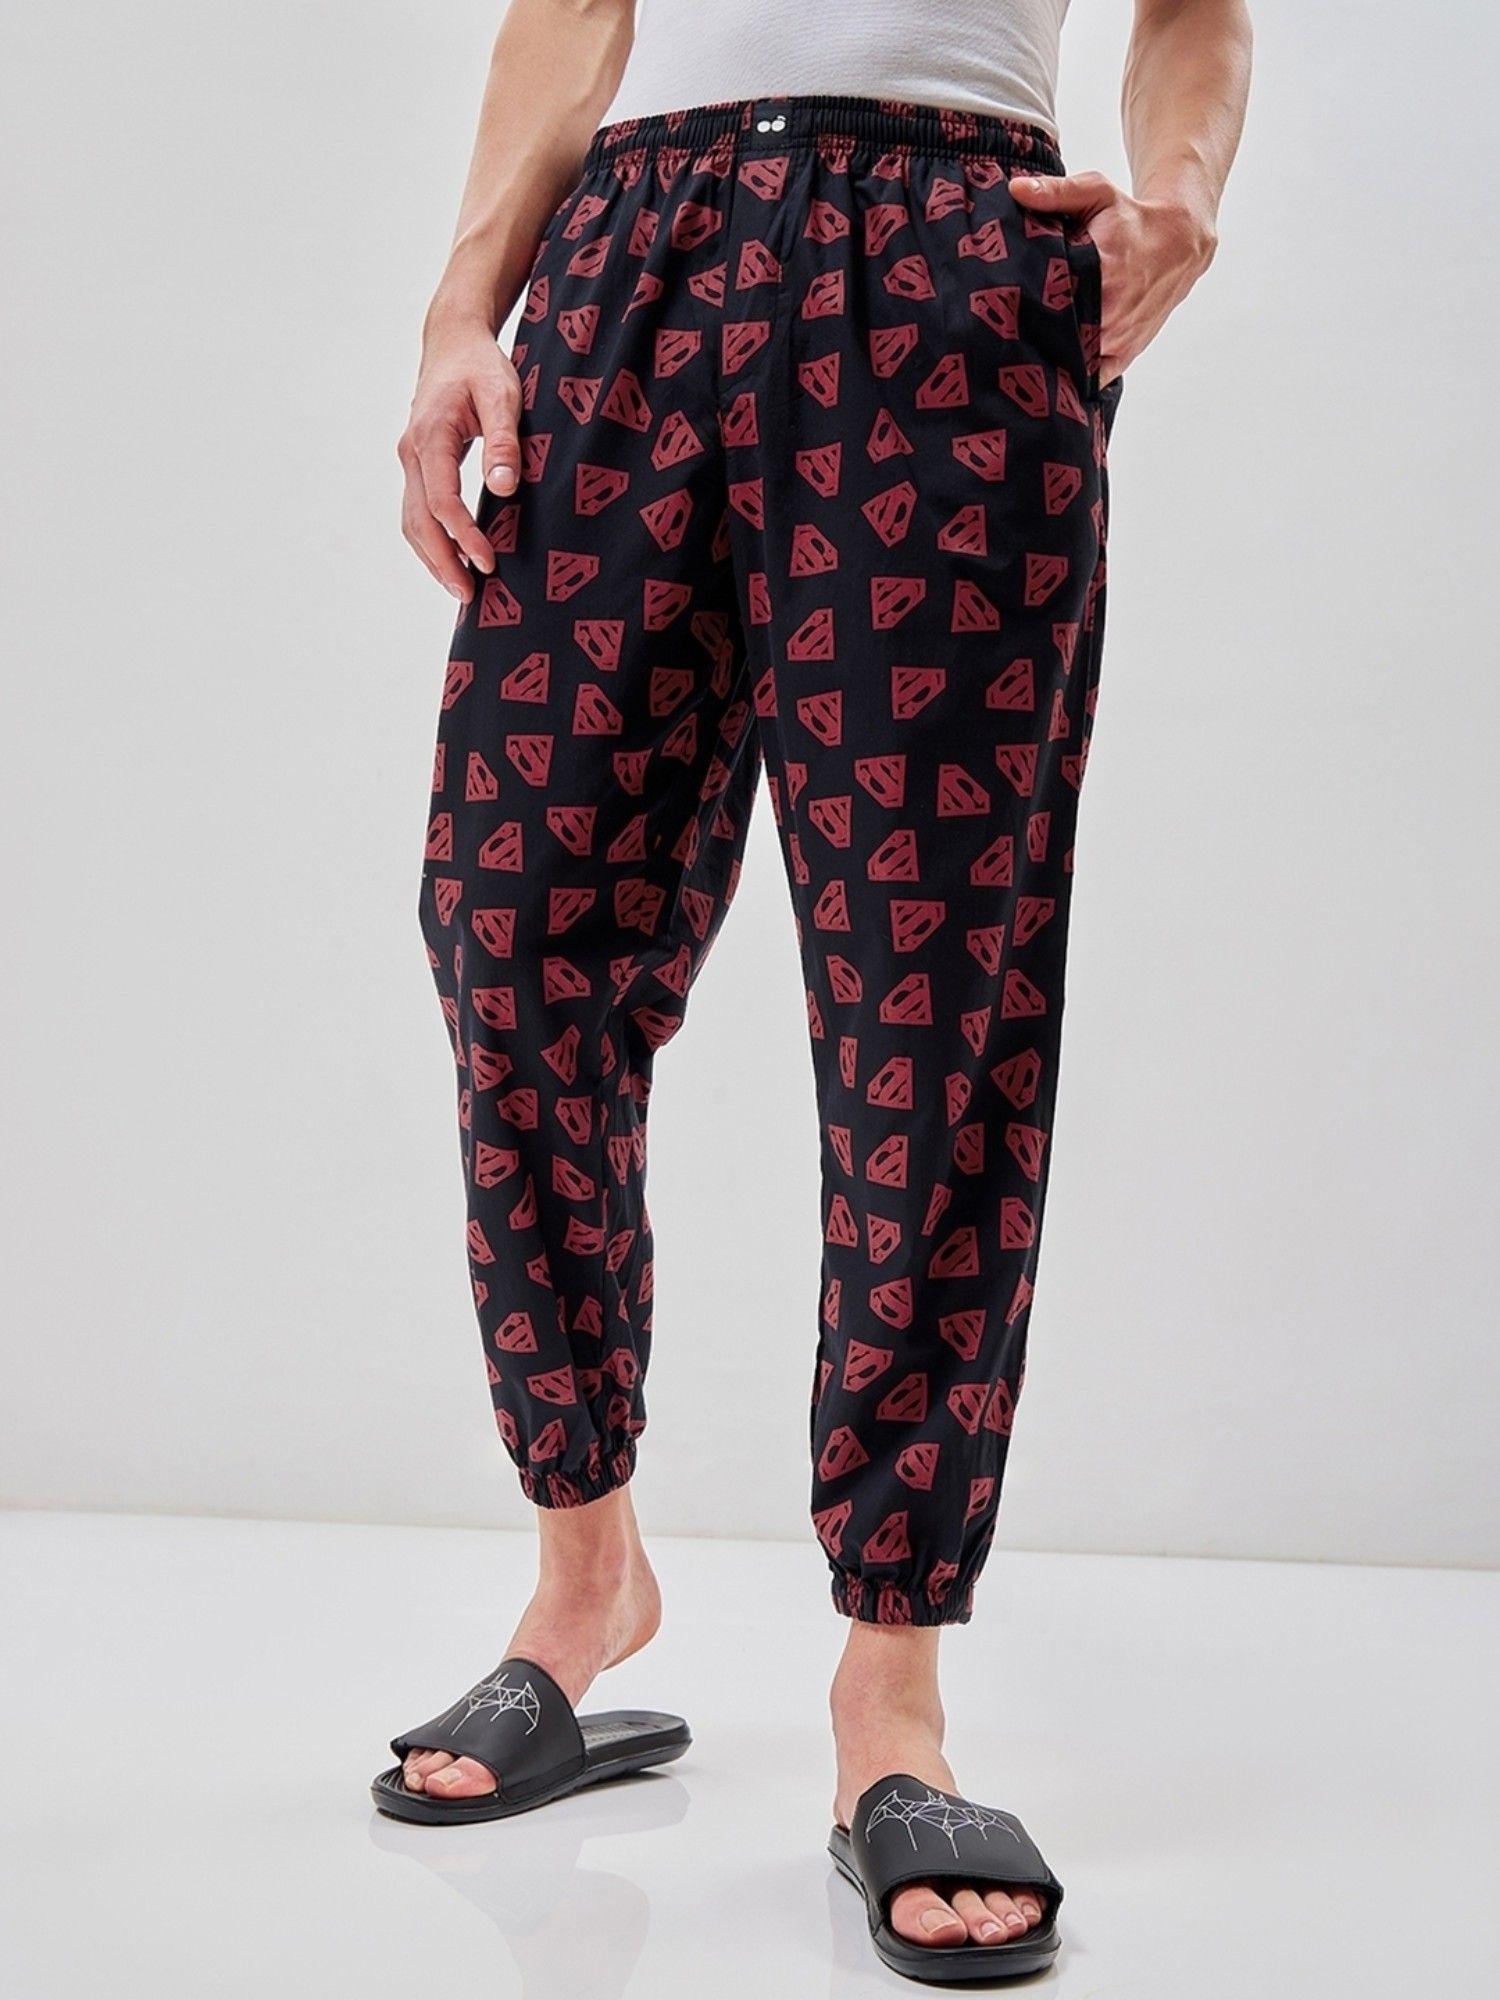 mens black all over printed pyjama